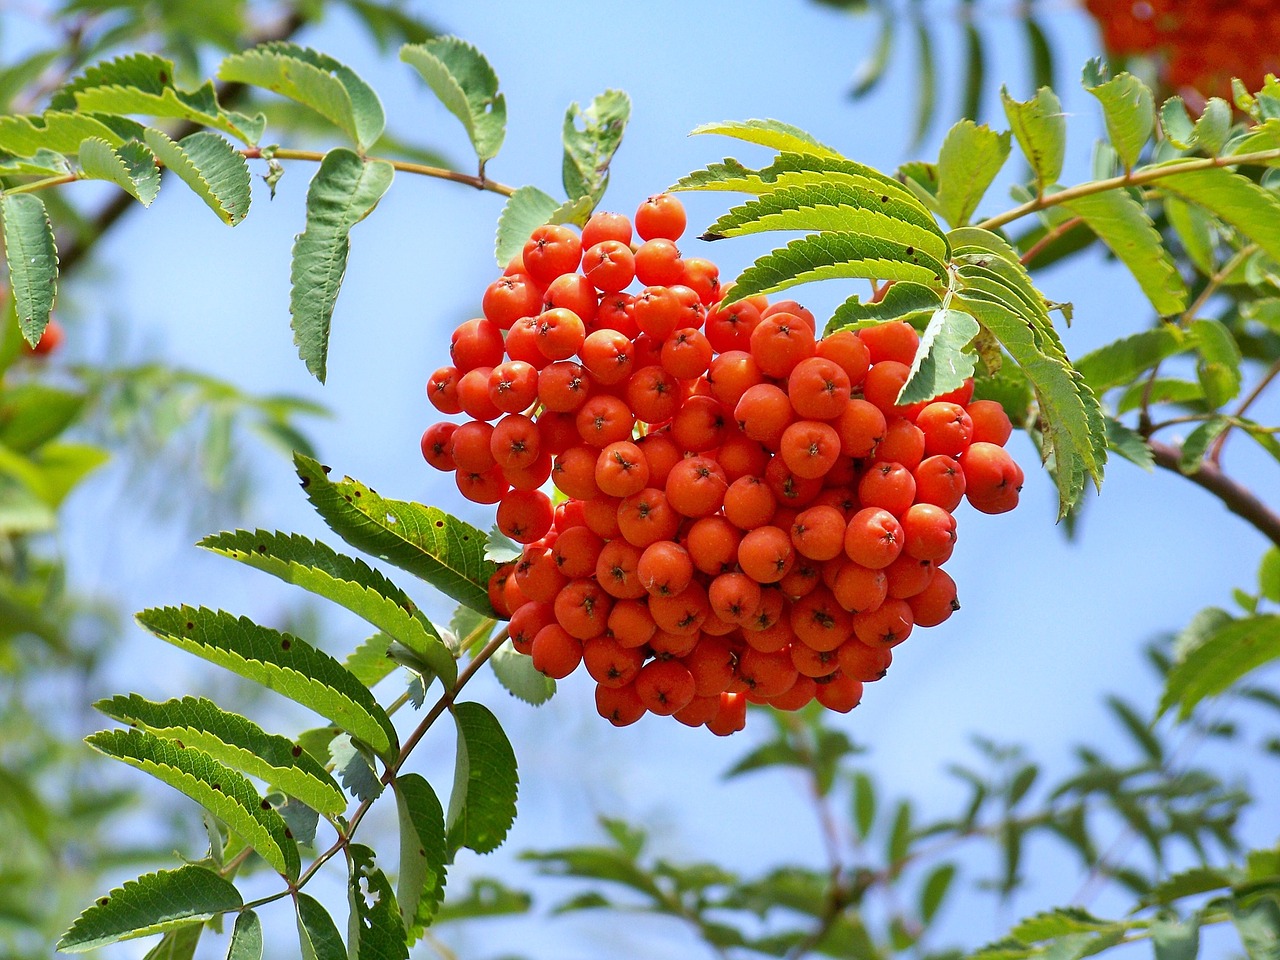 Rowan berry,fruits,crane,tree,plants - free image from needpix.com